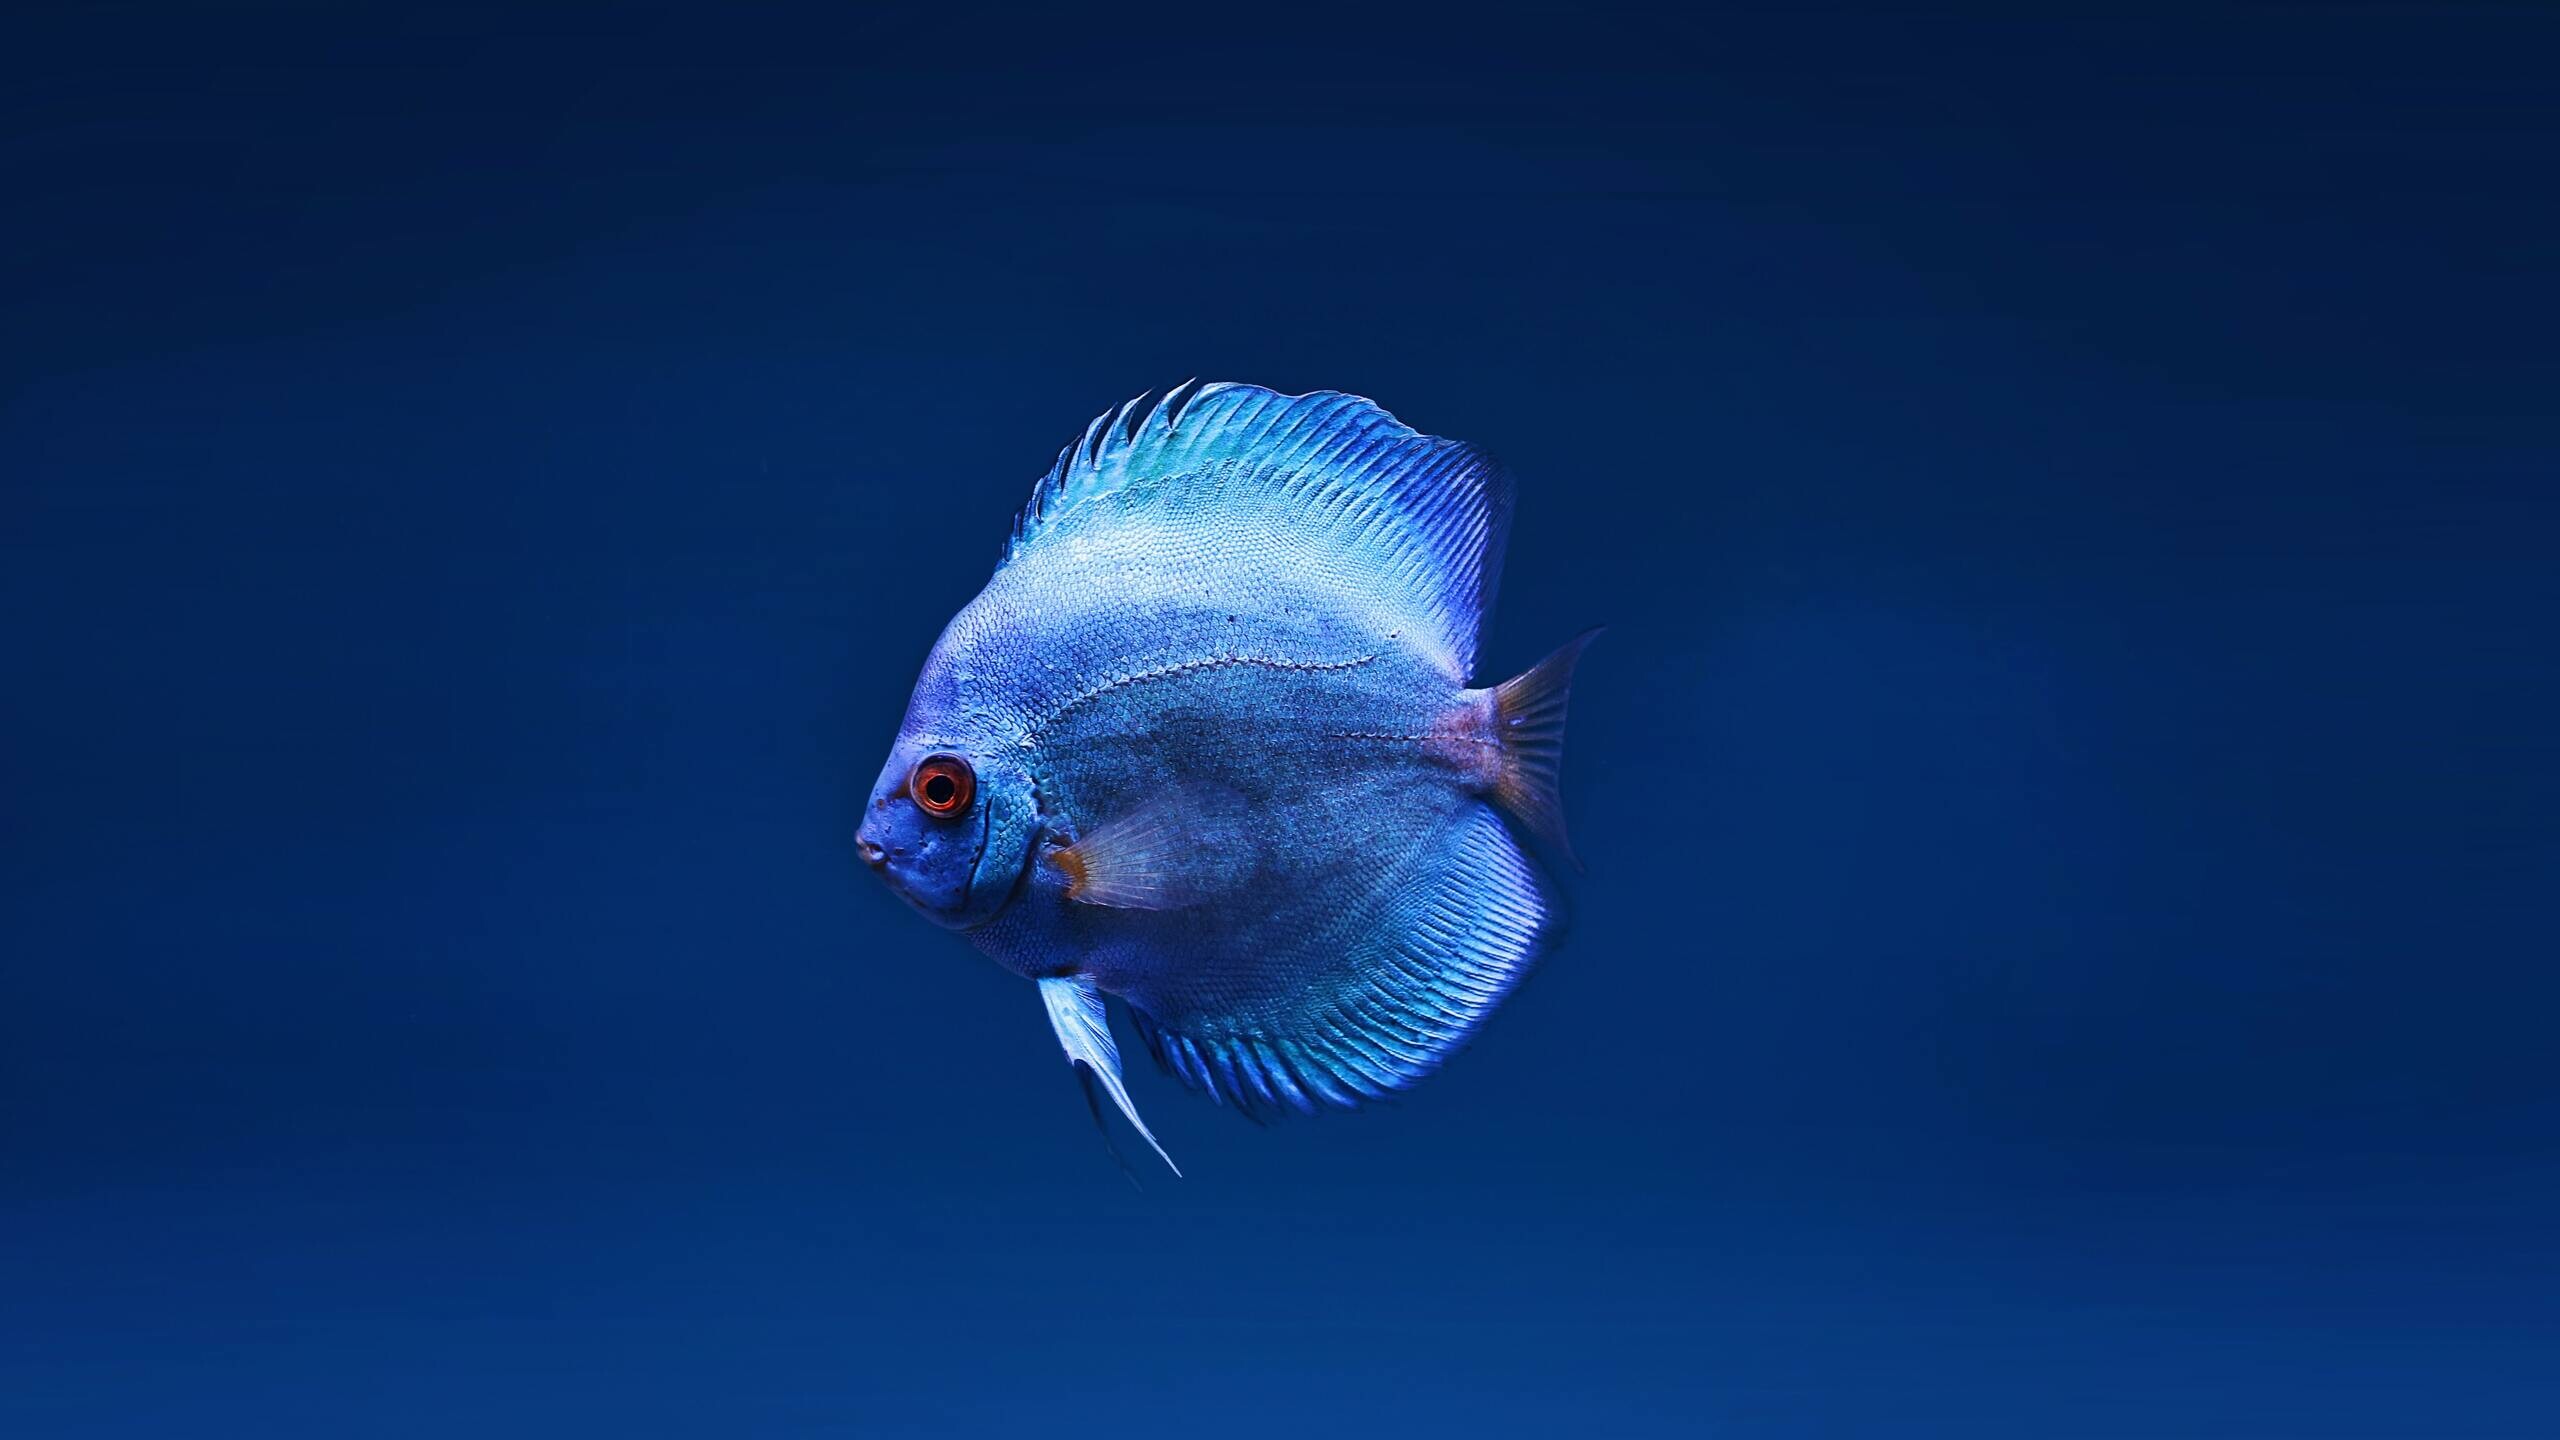 Blue discus fish, HD 4k wallpapers, Colorful underwater creatures, Aquatic beauty, 2560x1440 HD Desktop